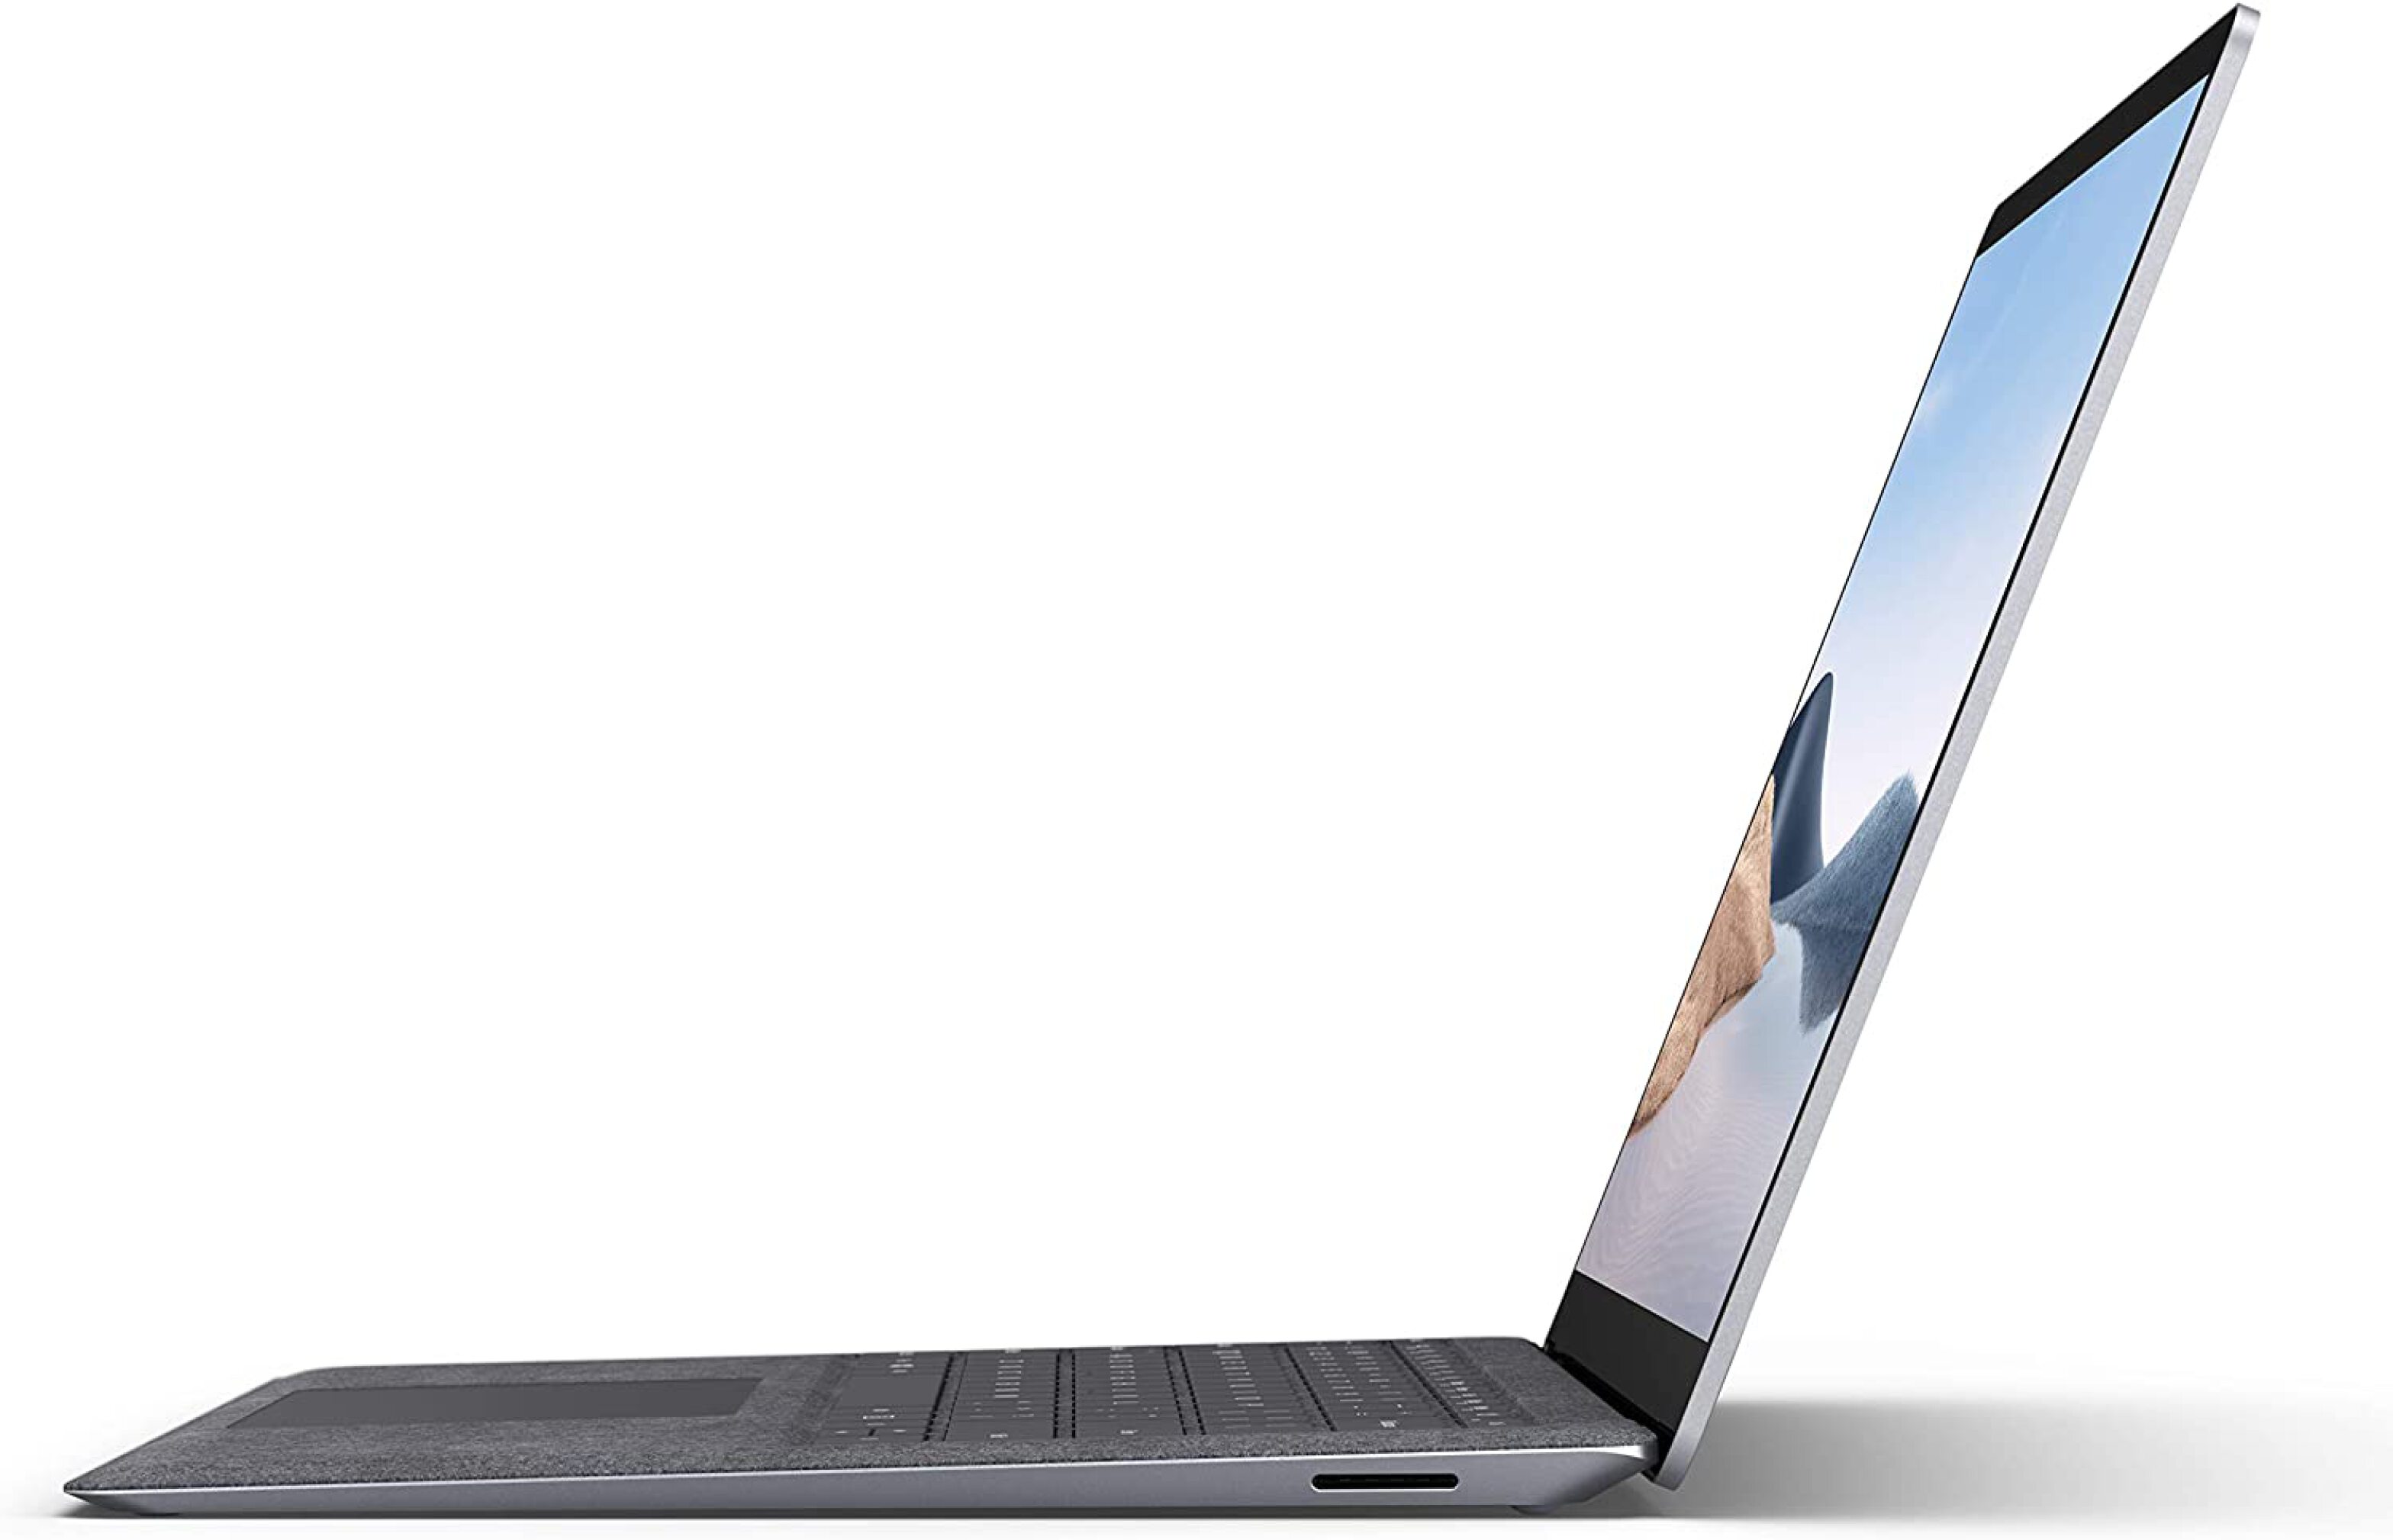  خرید،مشخصات و قیمت لپ تاپ Surface Laptop 4 | لاکچری لپ تاپ 